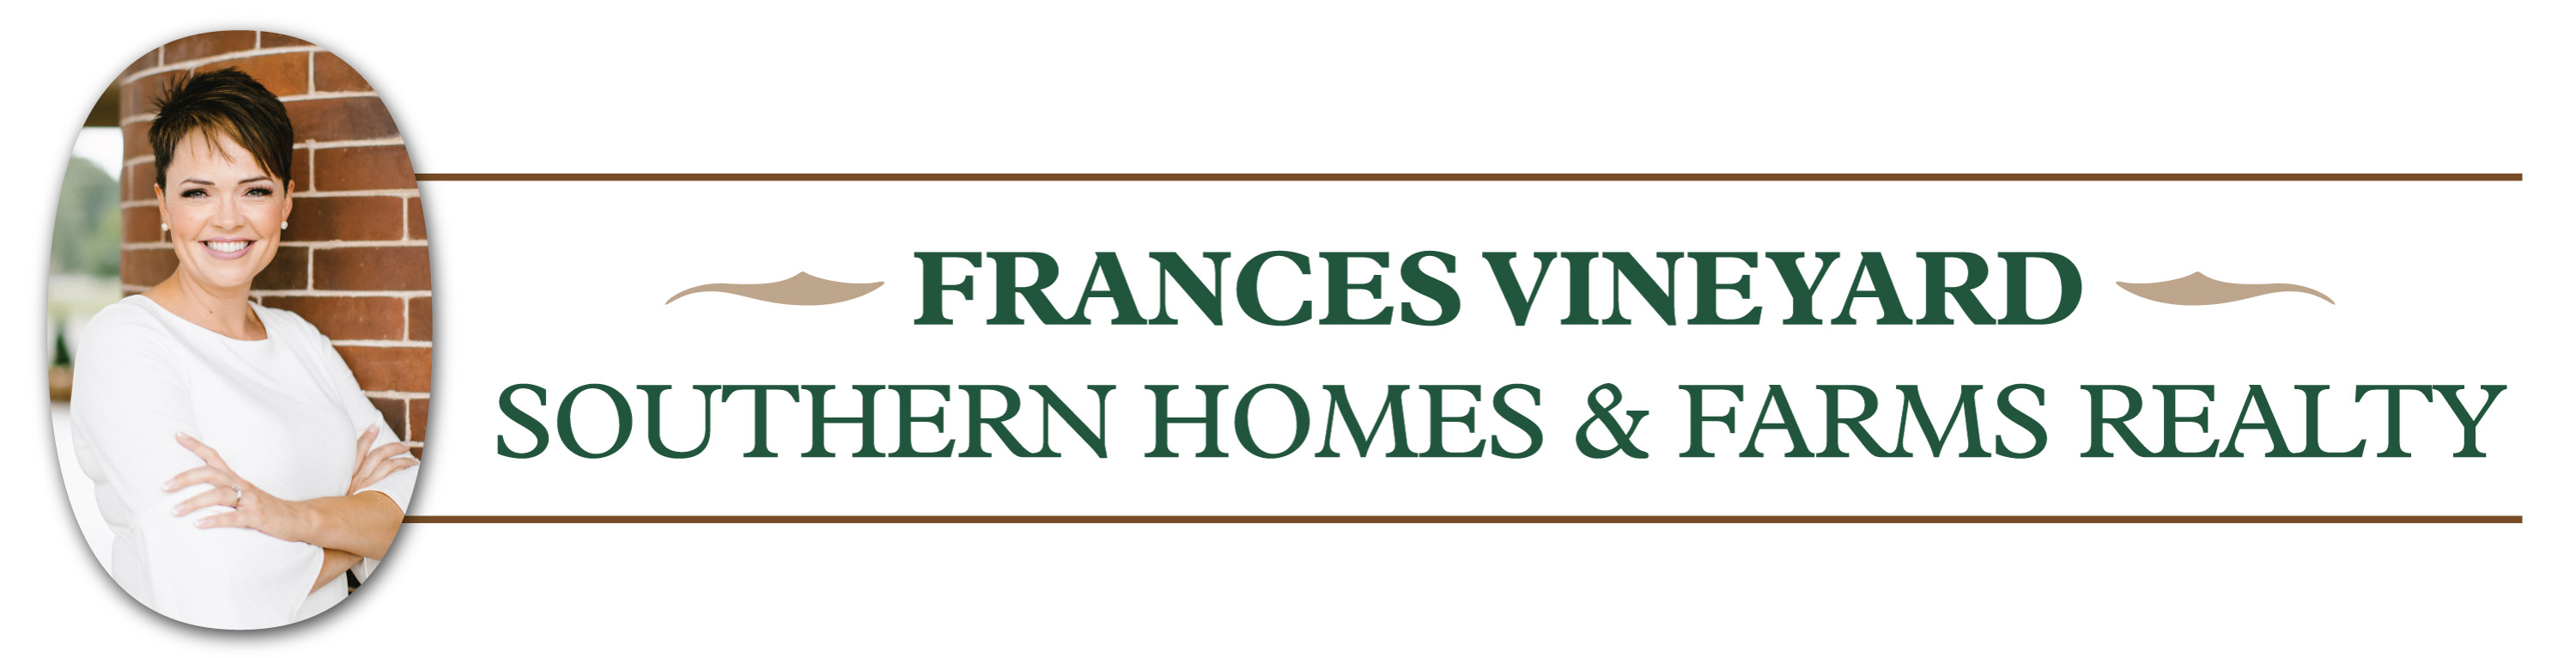 Frances Vineyard – Southern Homes & Farms Realty